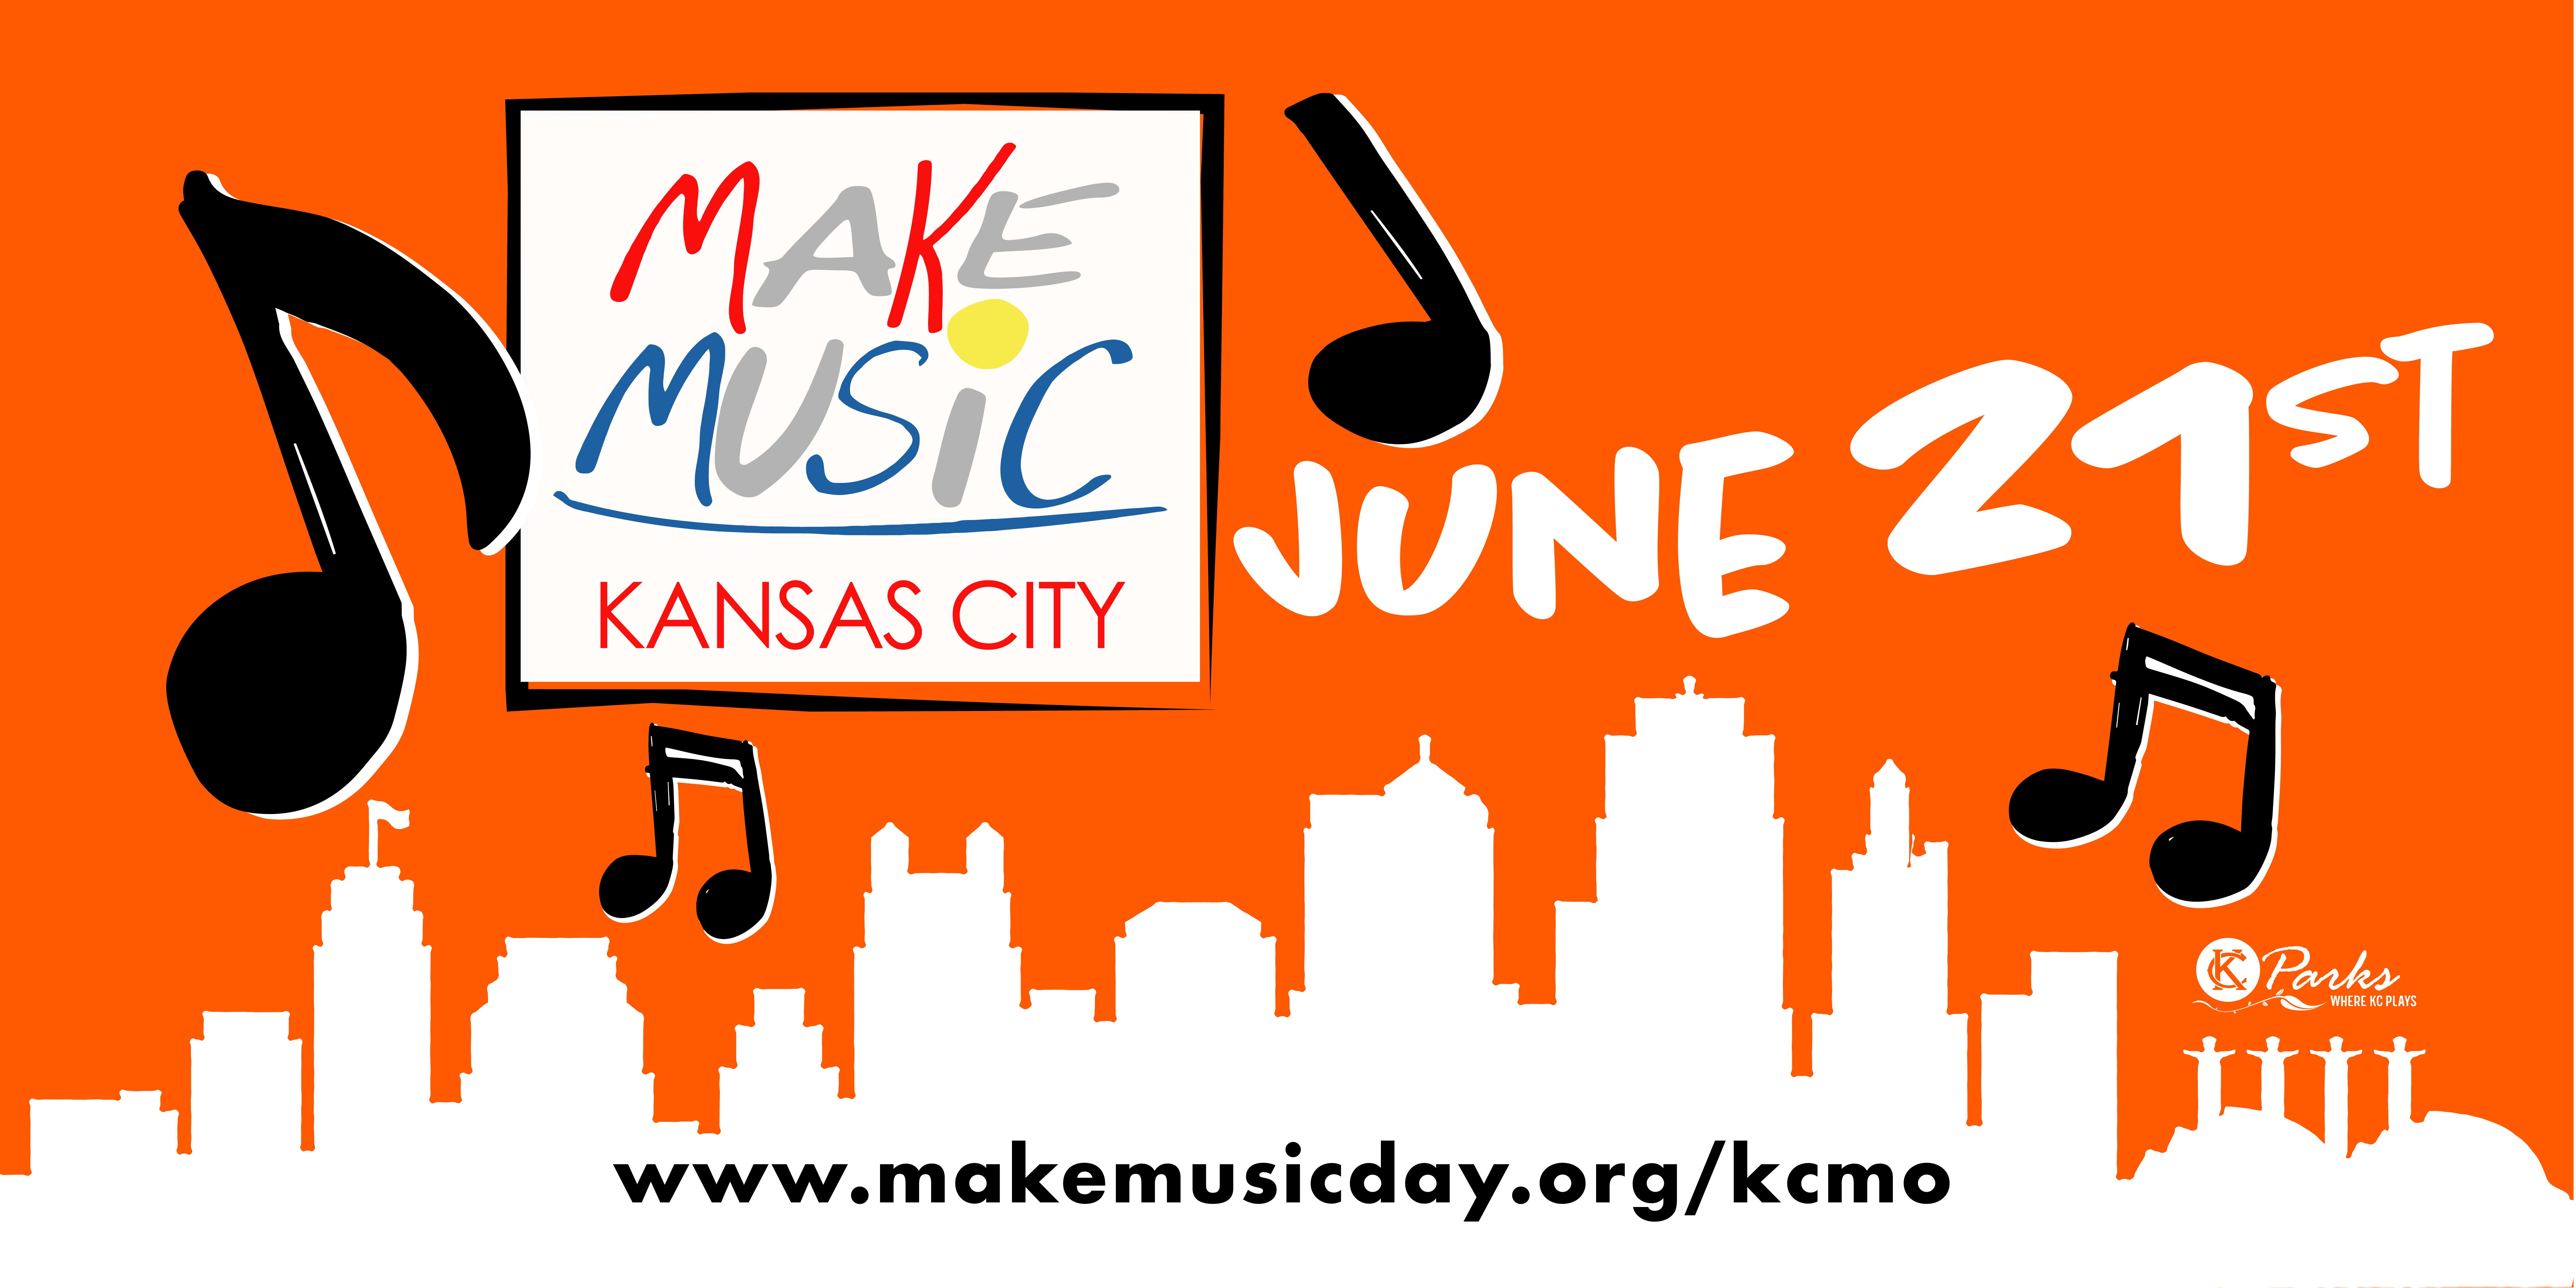 Make Music Kansas City debuts on June 21st!